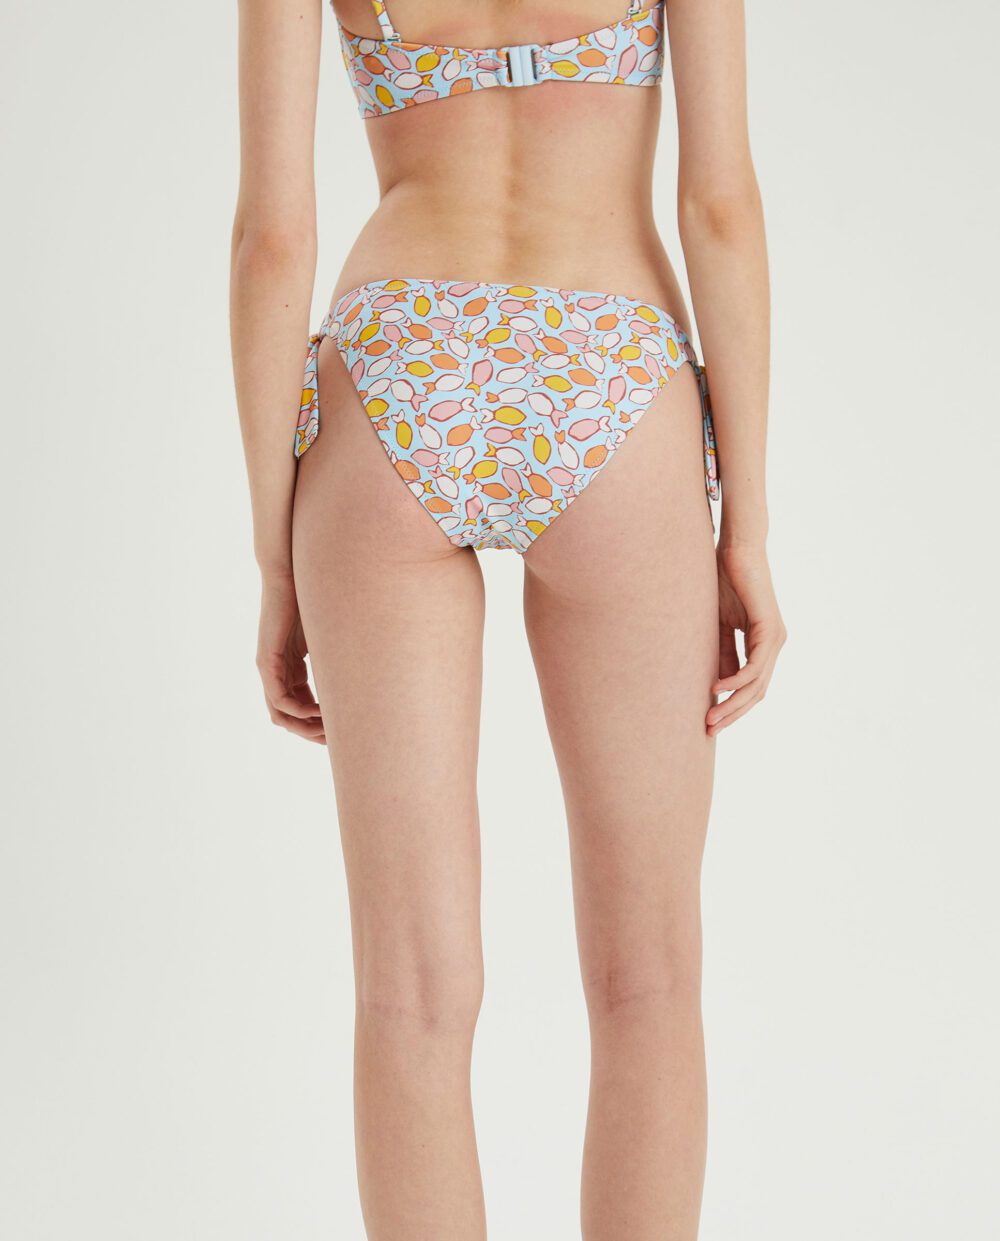 Bikini Bottom Μαγιό Με Σχέδιο Ψαράκια Compania Fantastica